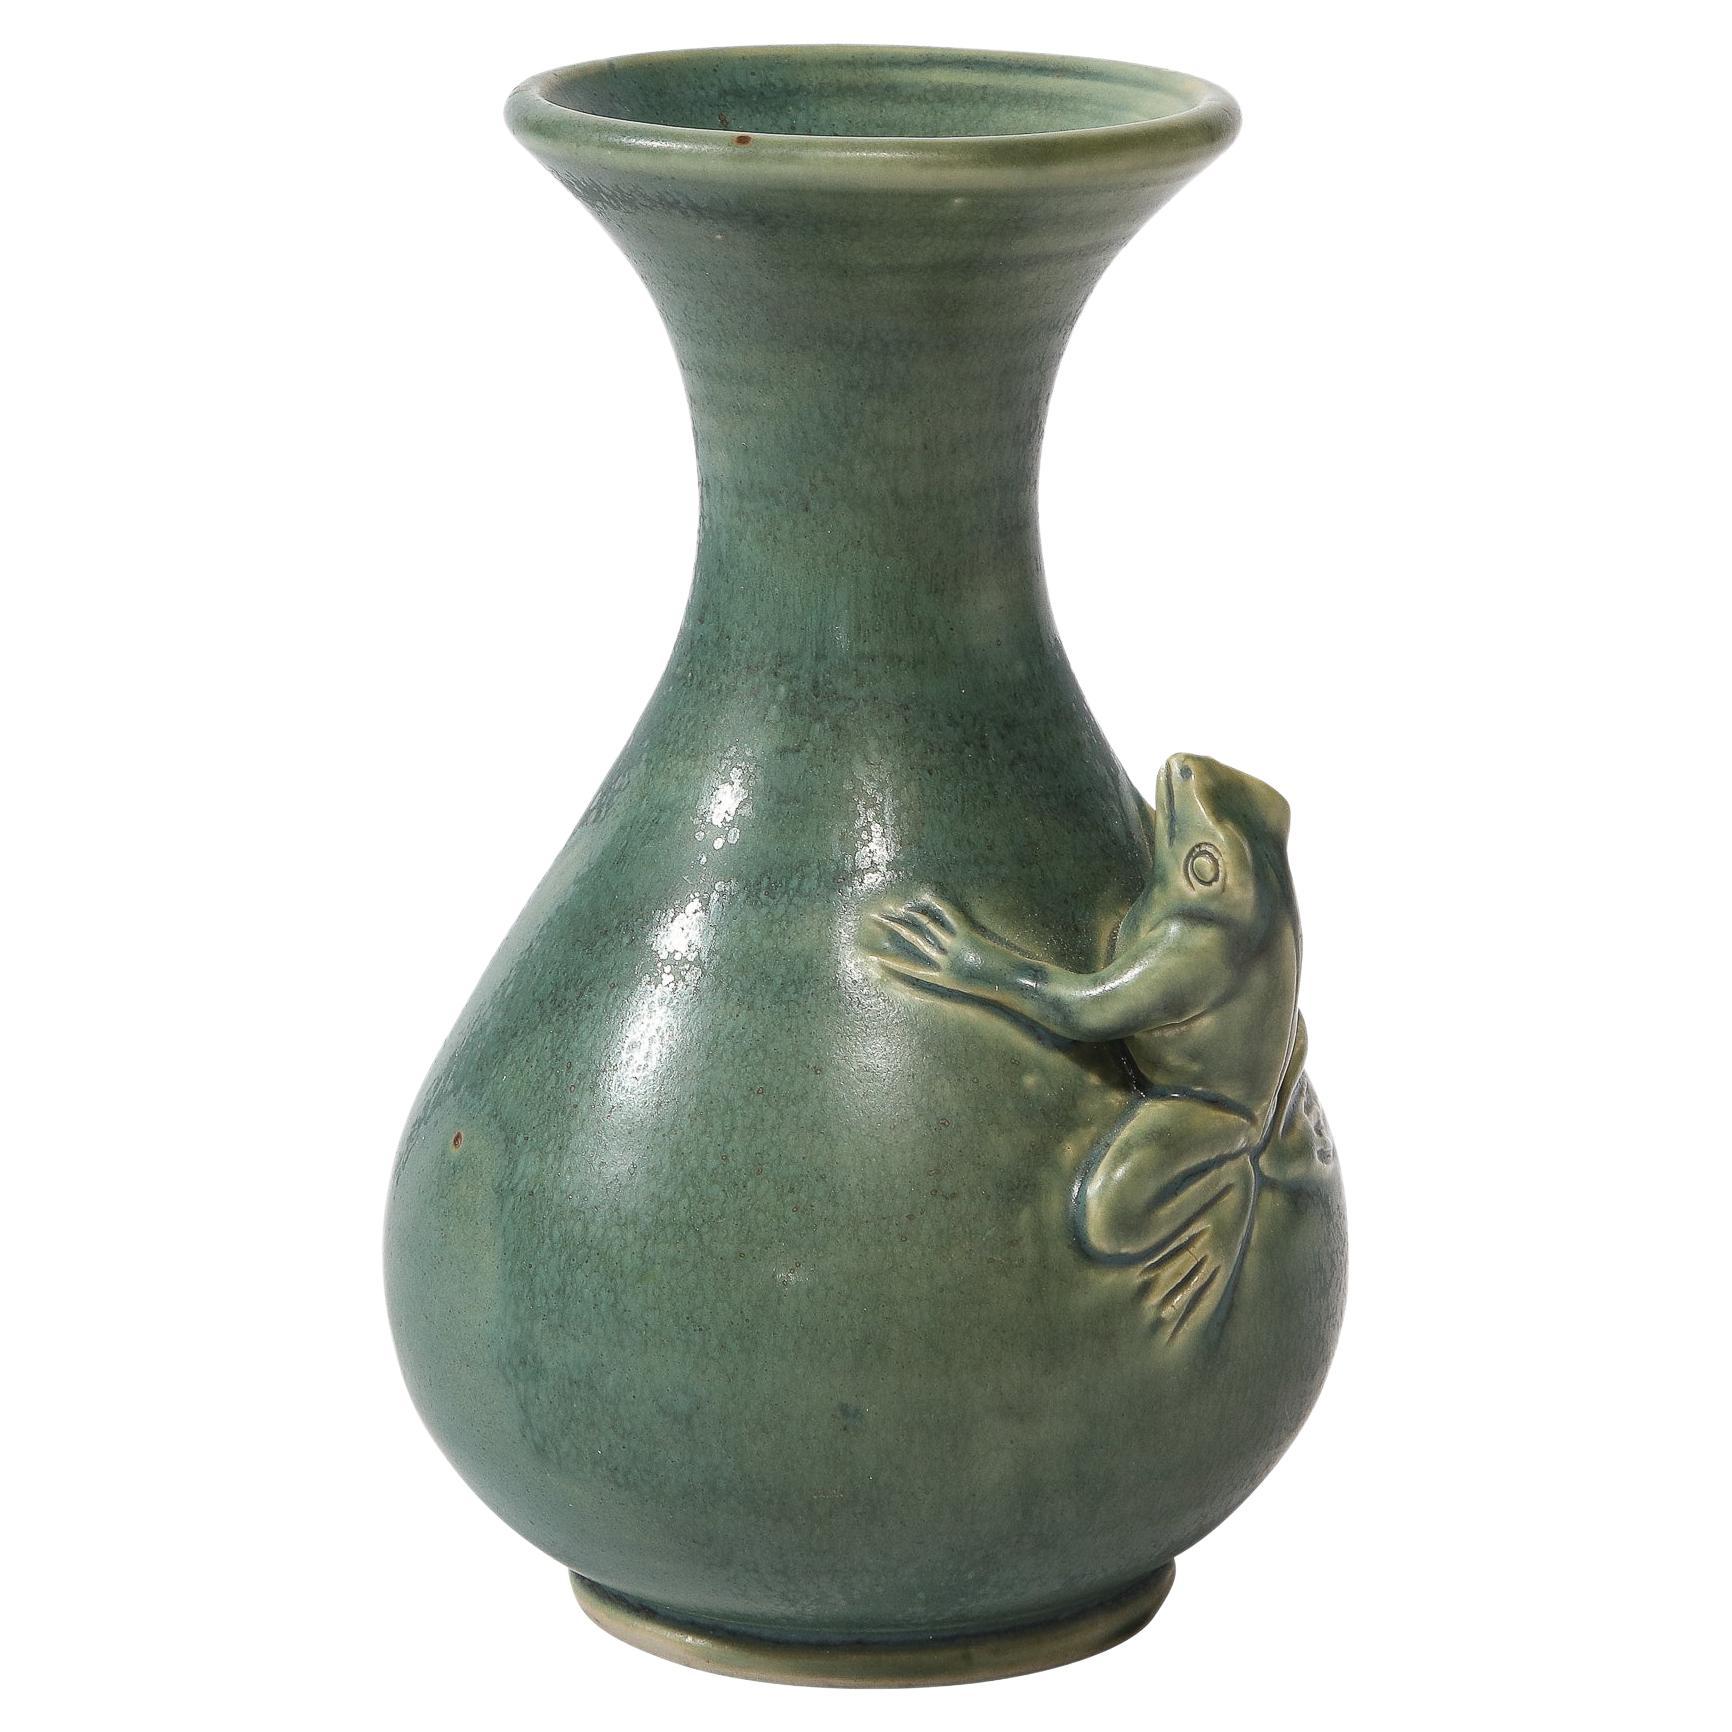 Modernist Sculptural Muted Jade Glazed Ceramic Vase with Frog Motif in Relief For Sale